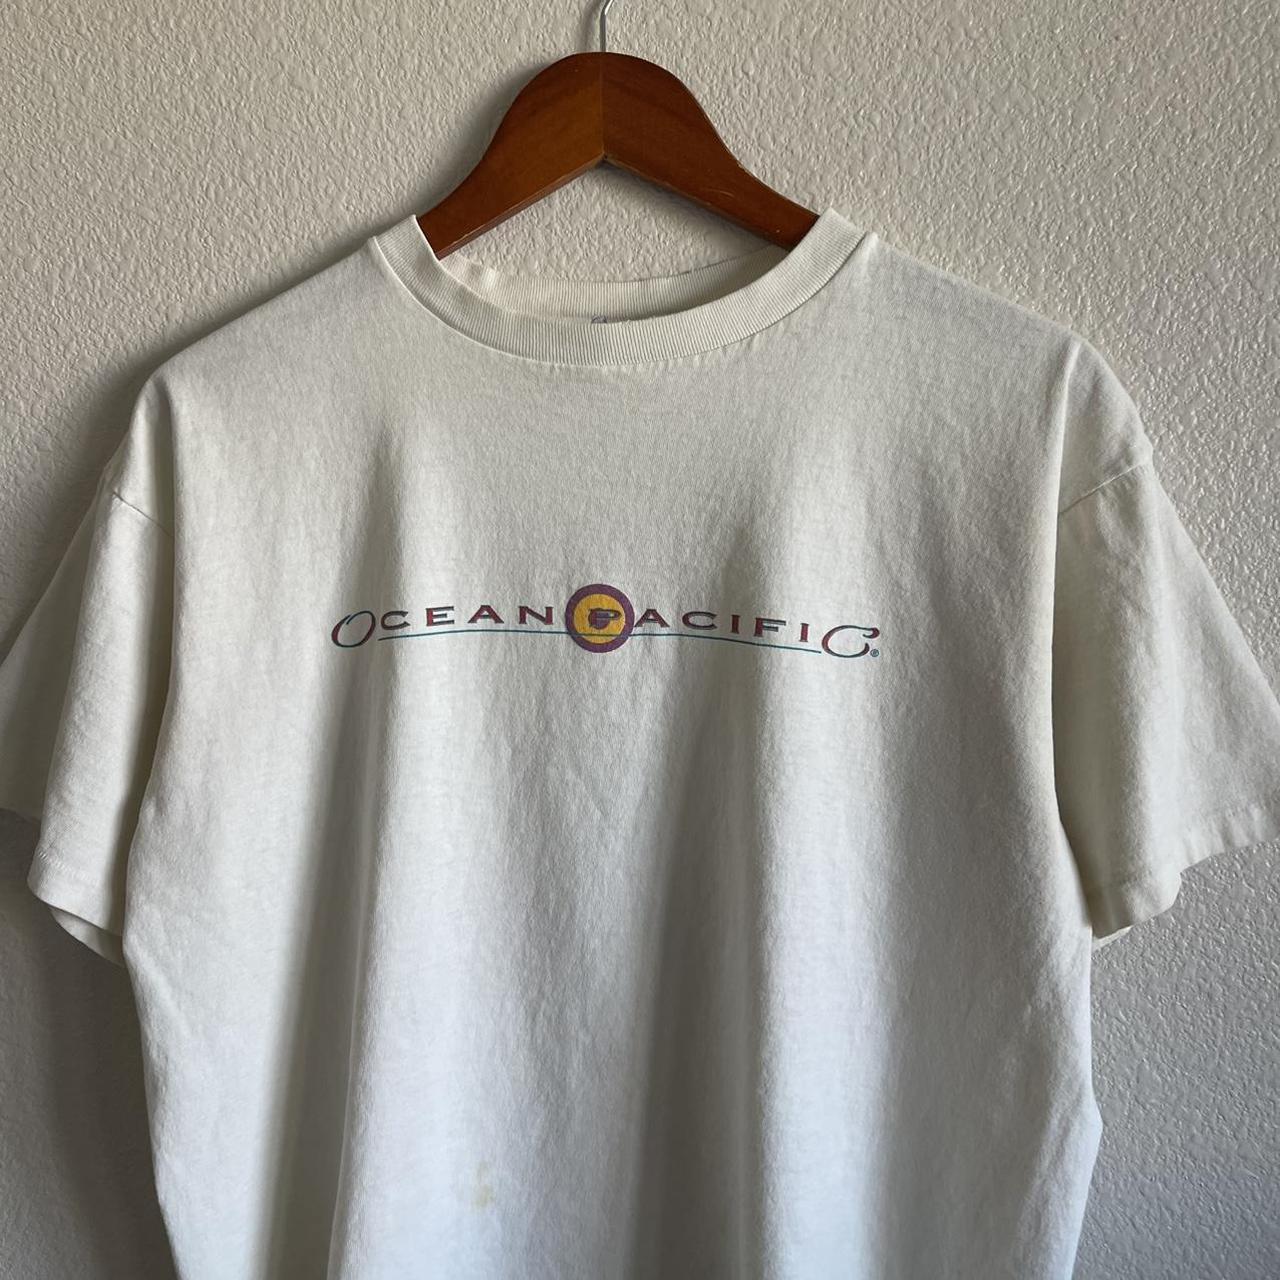 Ocean Pacific Men's White T-shirt